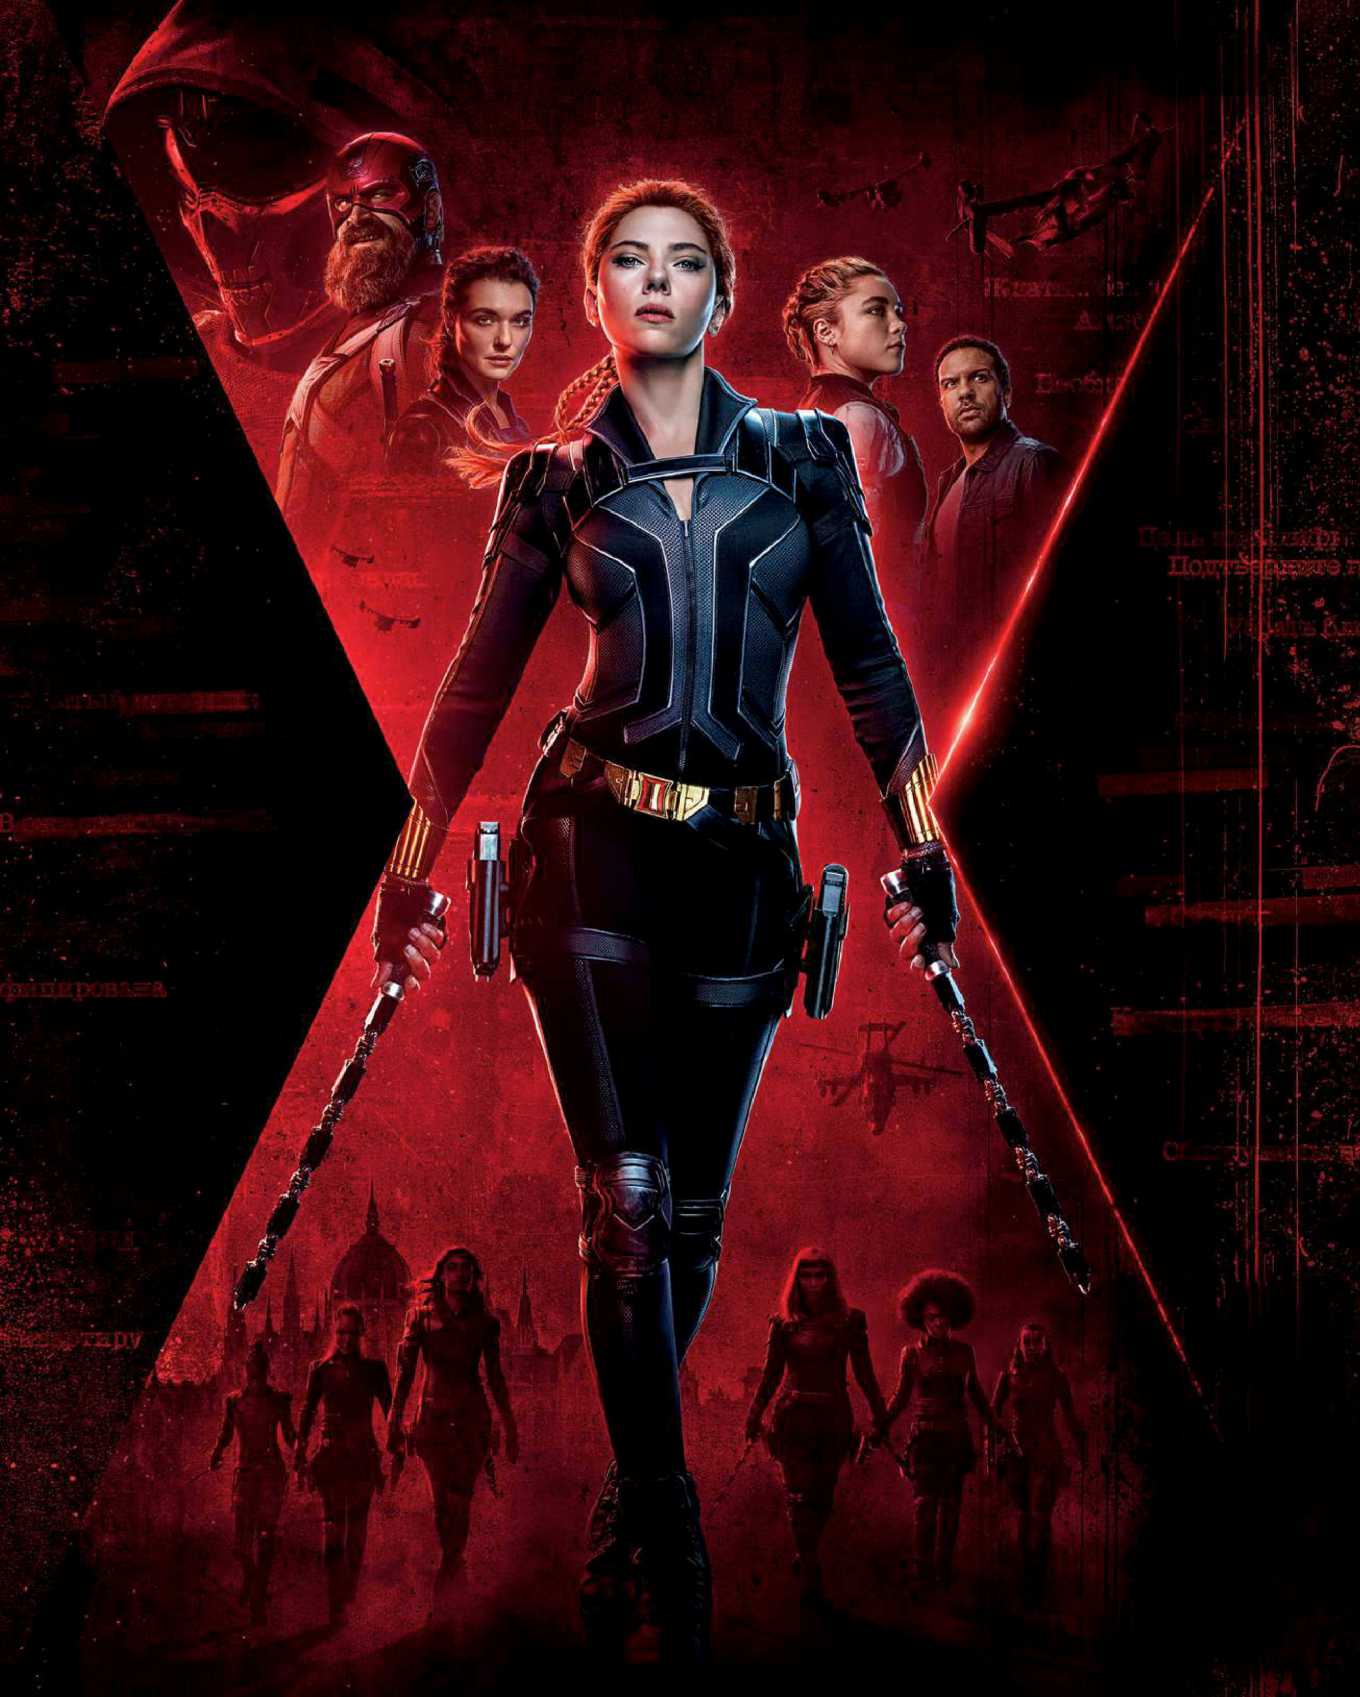 Scarlett Johansson â€“ Best Movie Italy Magazine (April 2020)